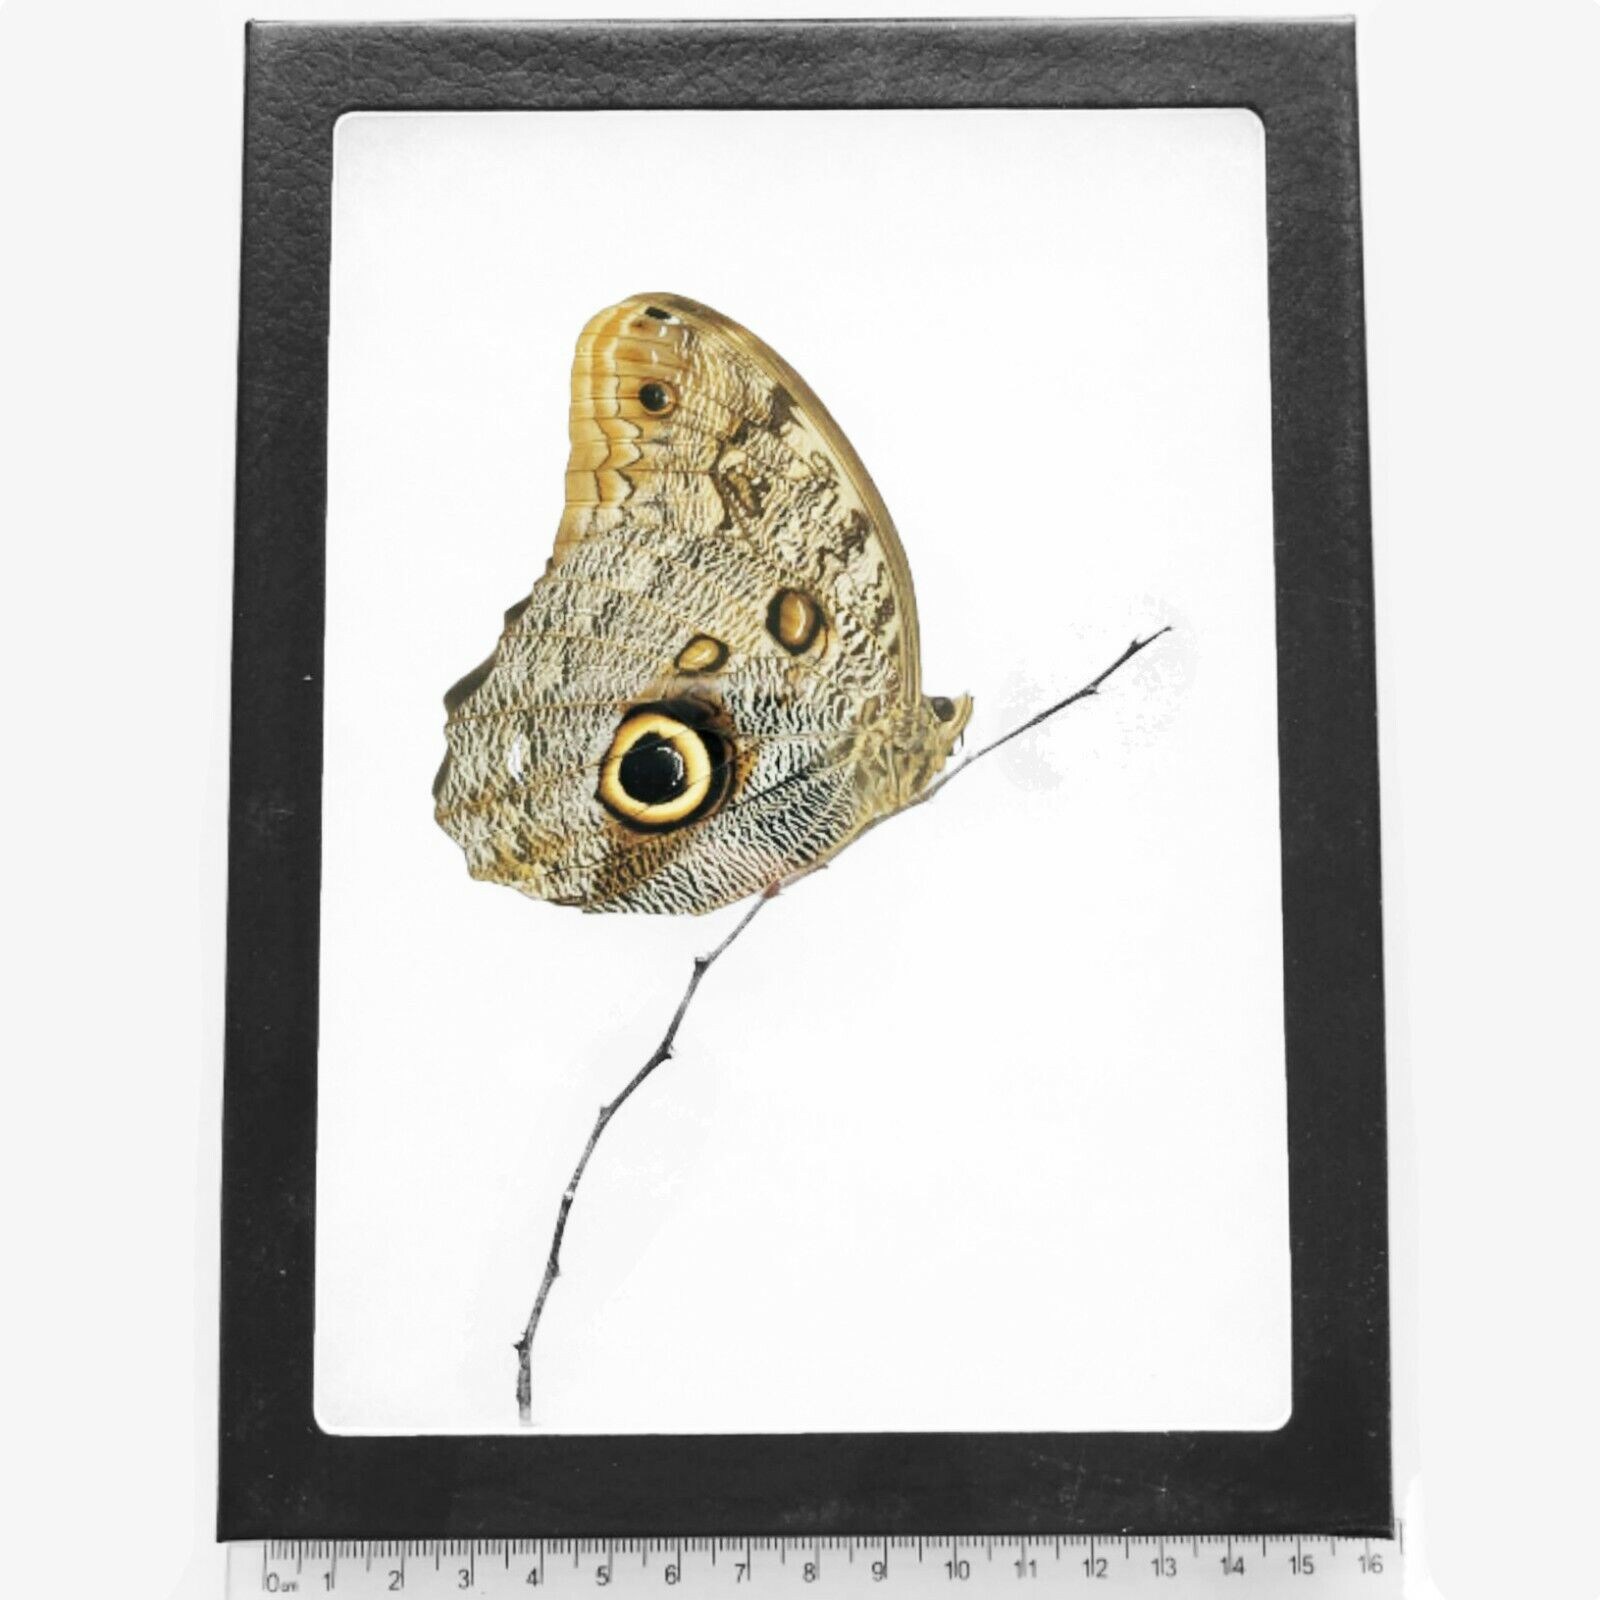 Caligo memnon LIVE MOUNT owl framed butterfly verso Peru